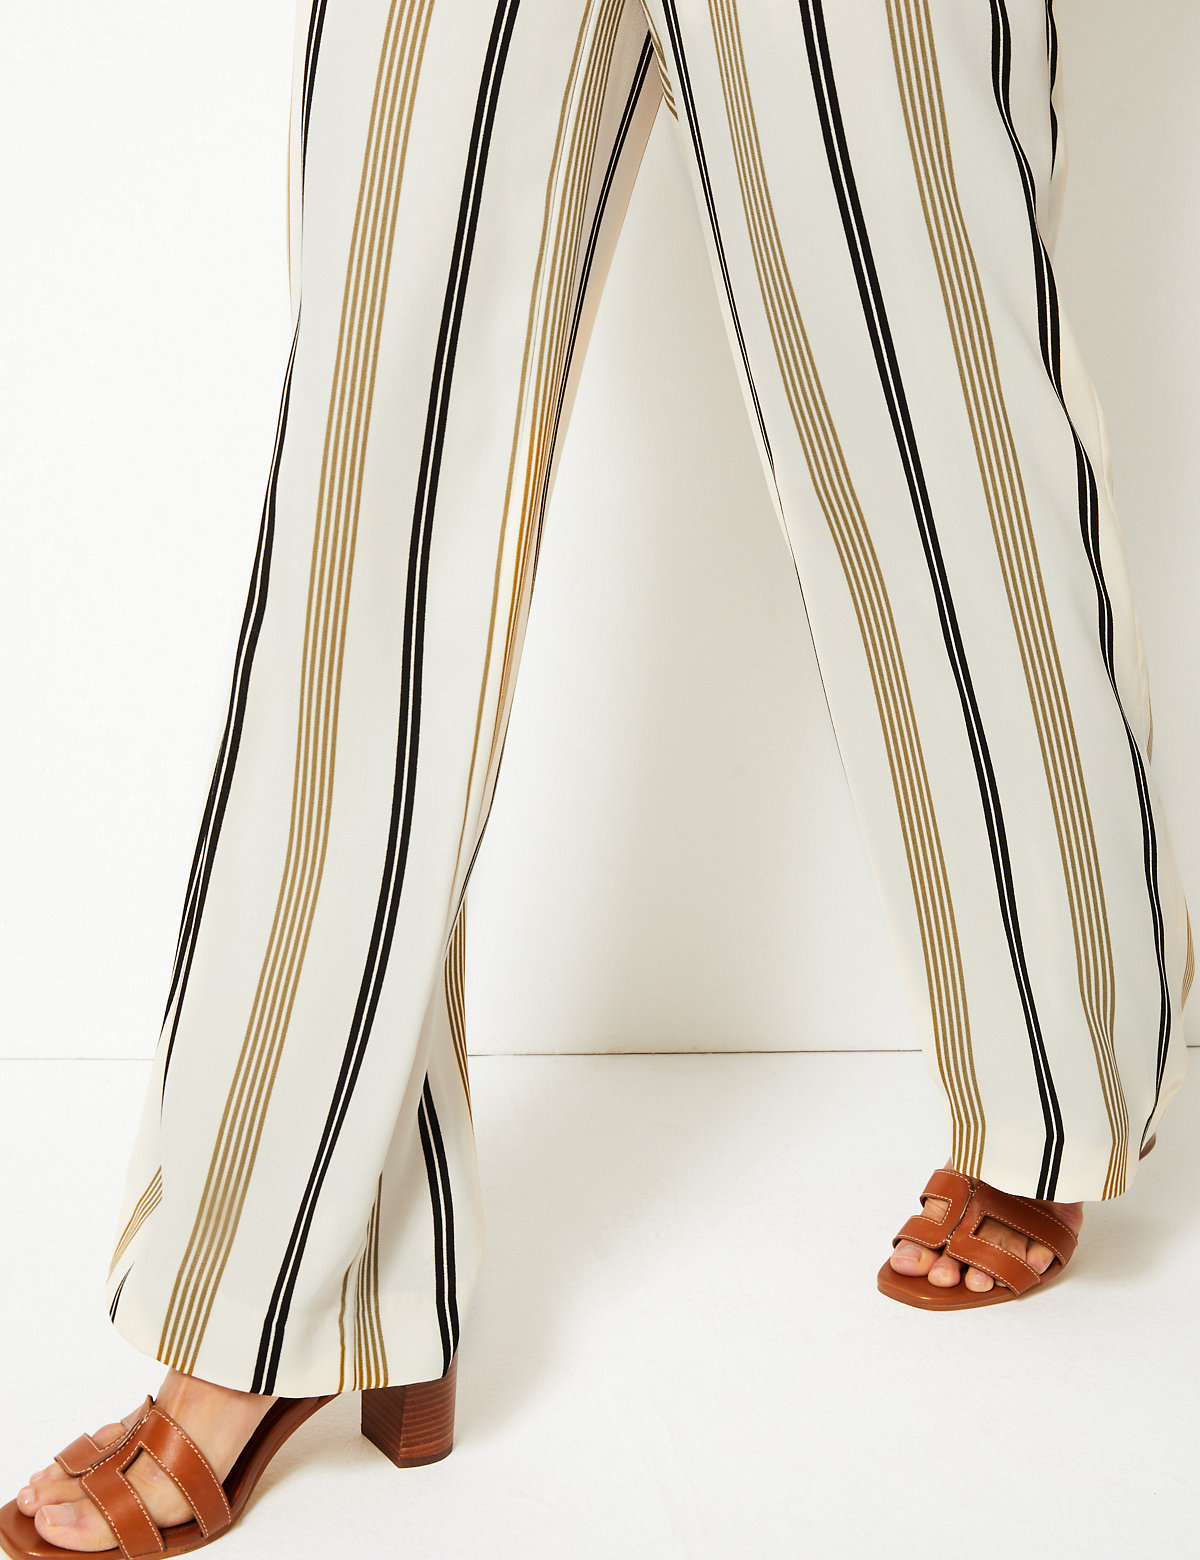 Striped Wide Leg Trousers